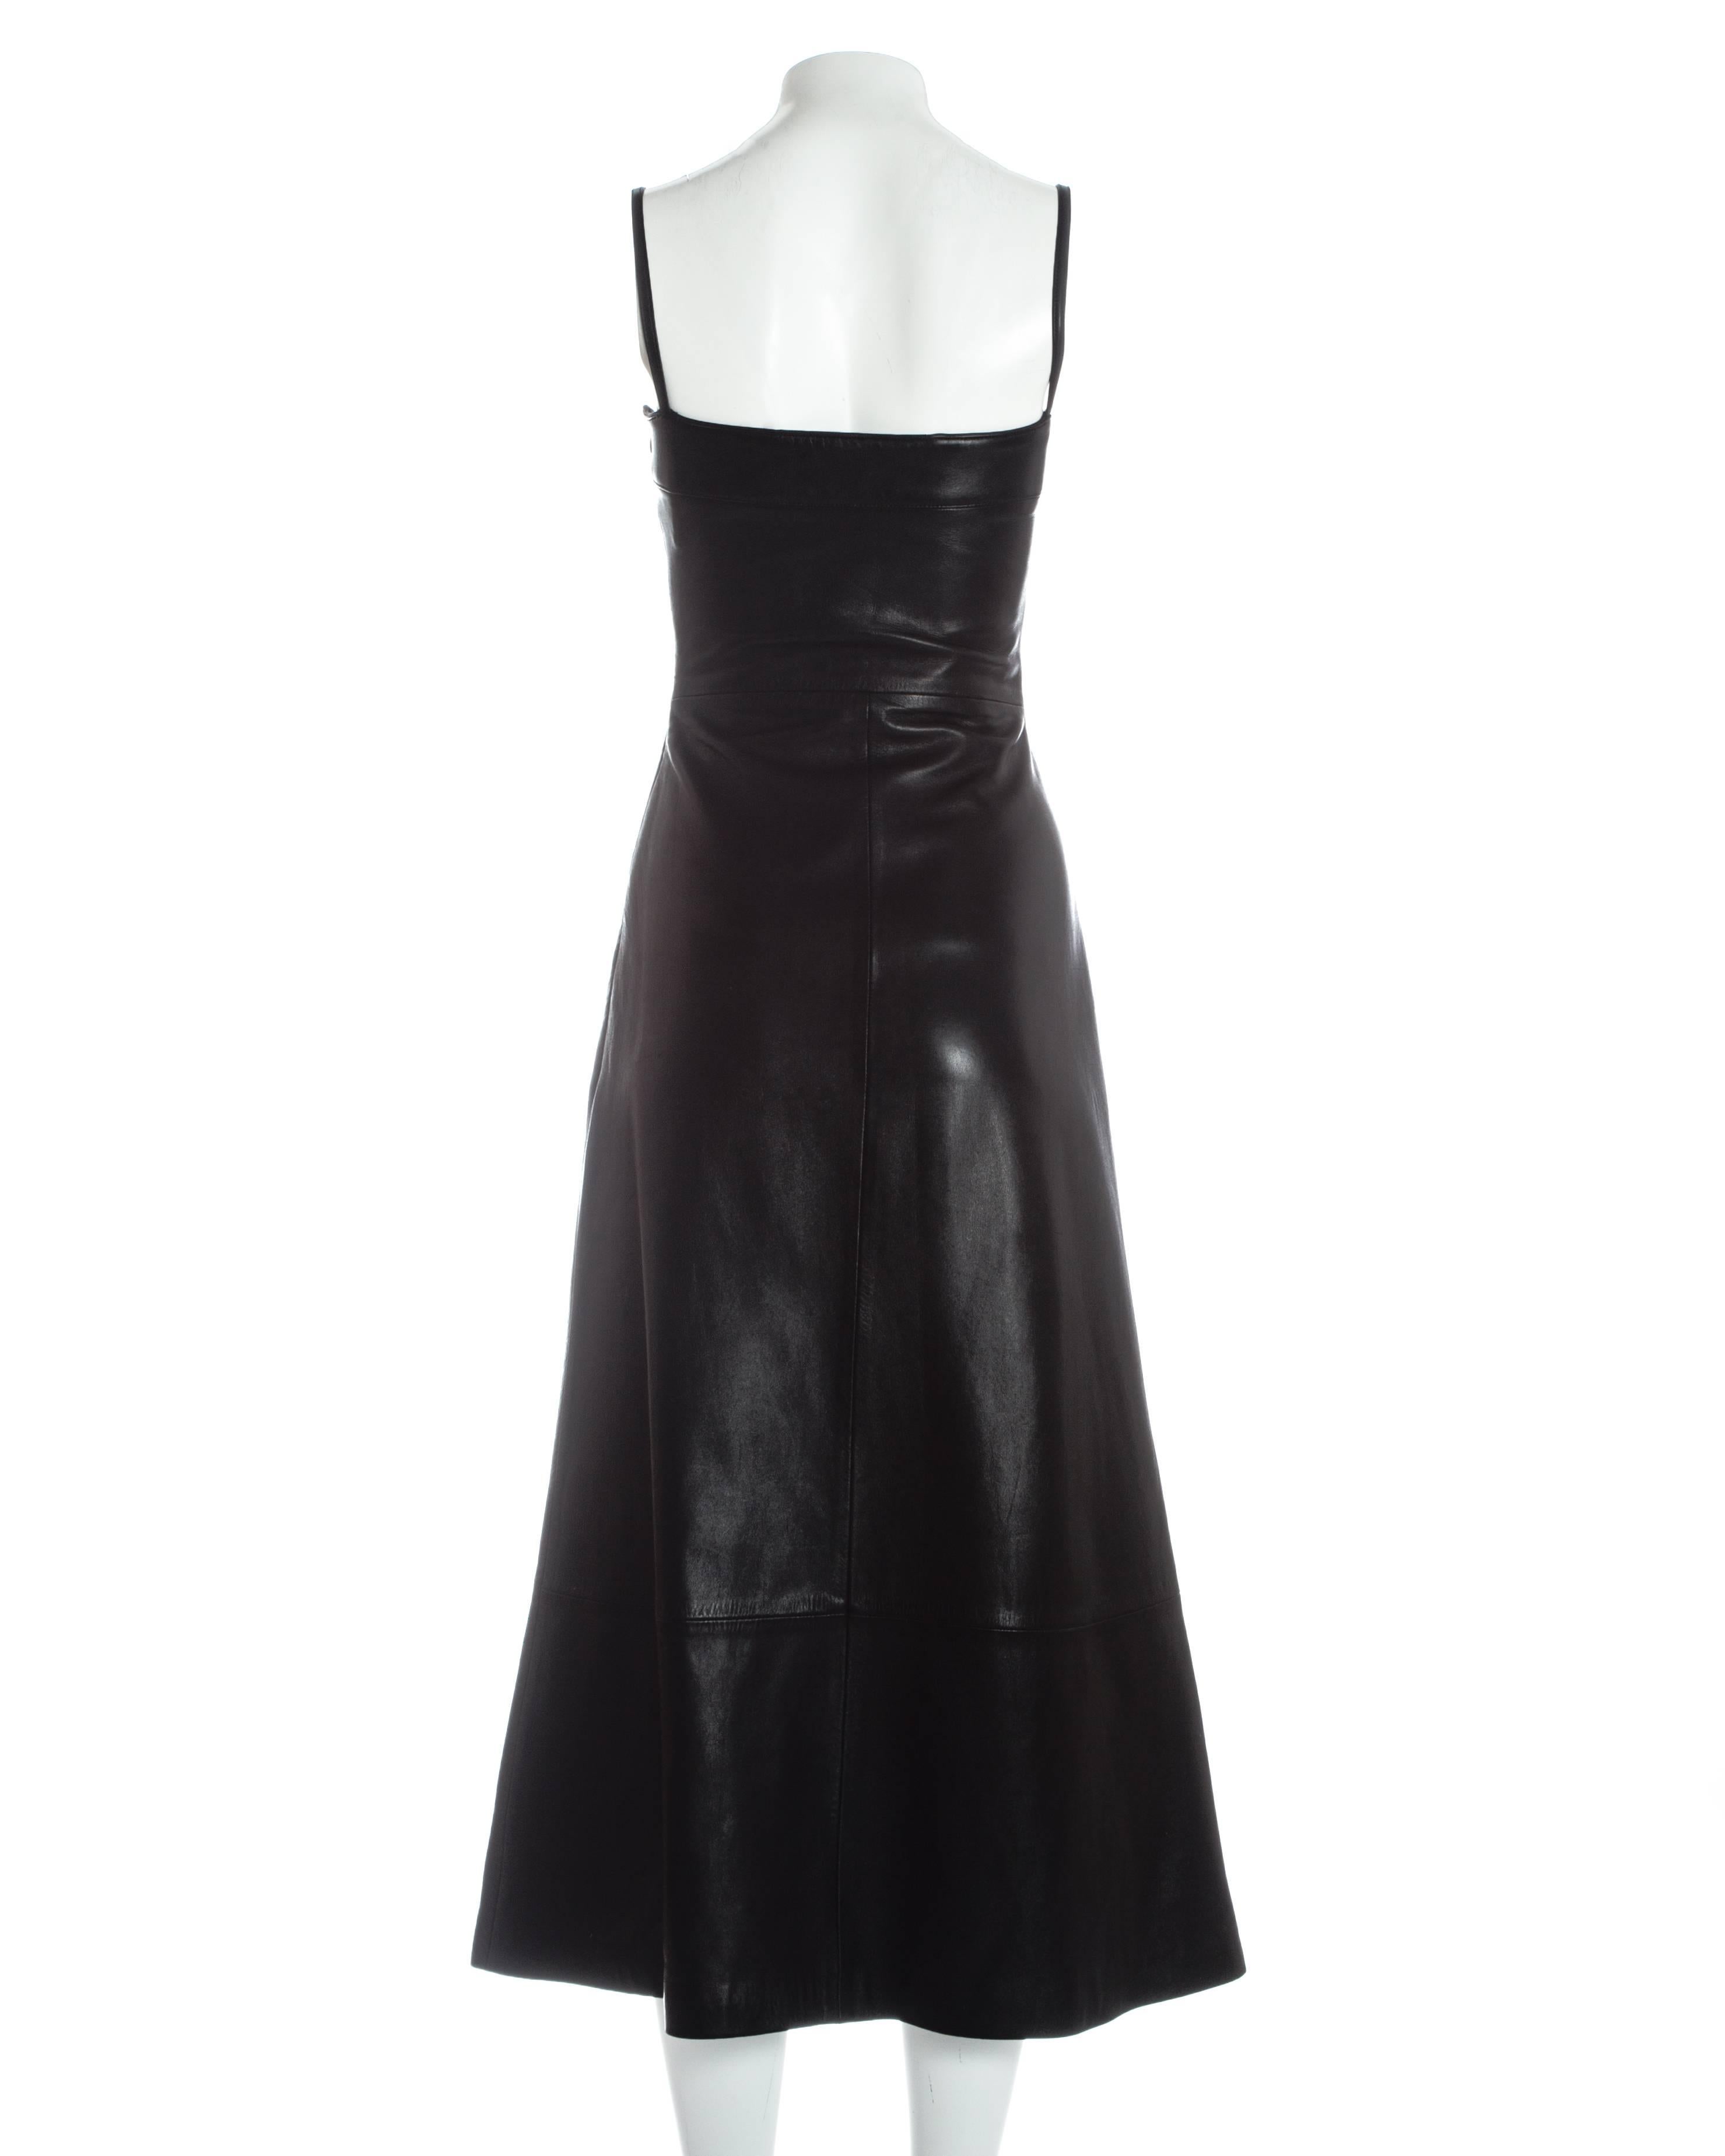 Women's Gianni Versace black lambskin leather A-line ankle length dress, circa 1998